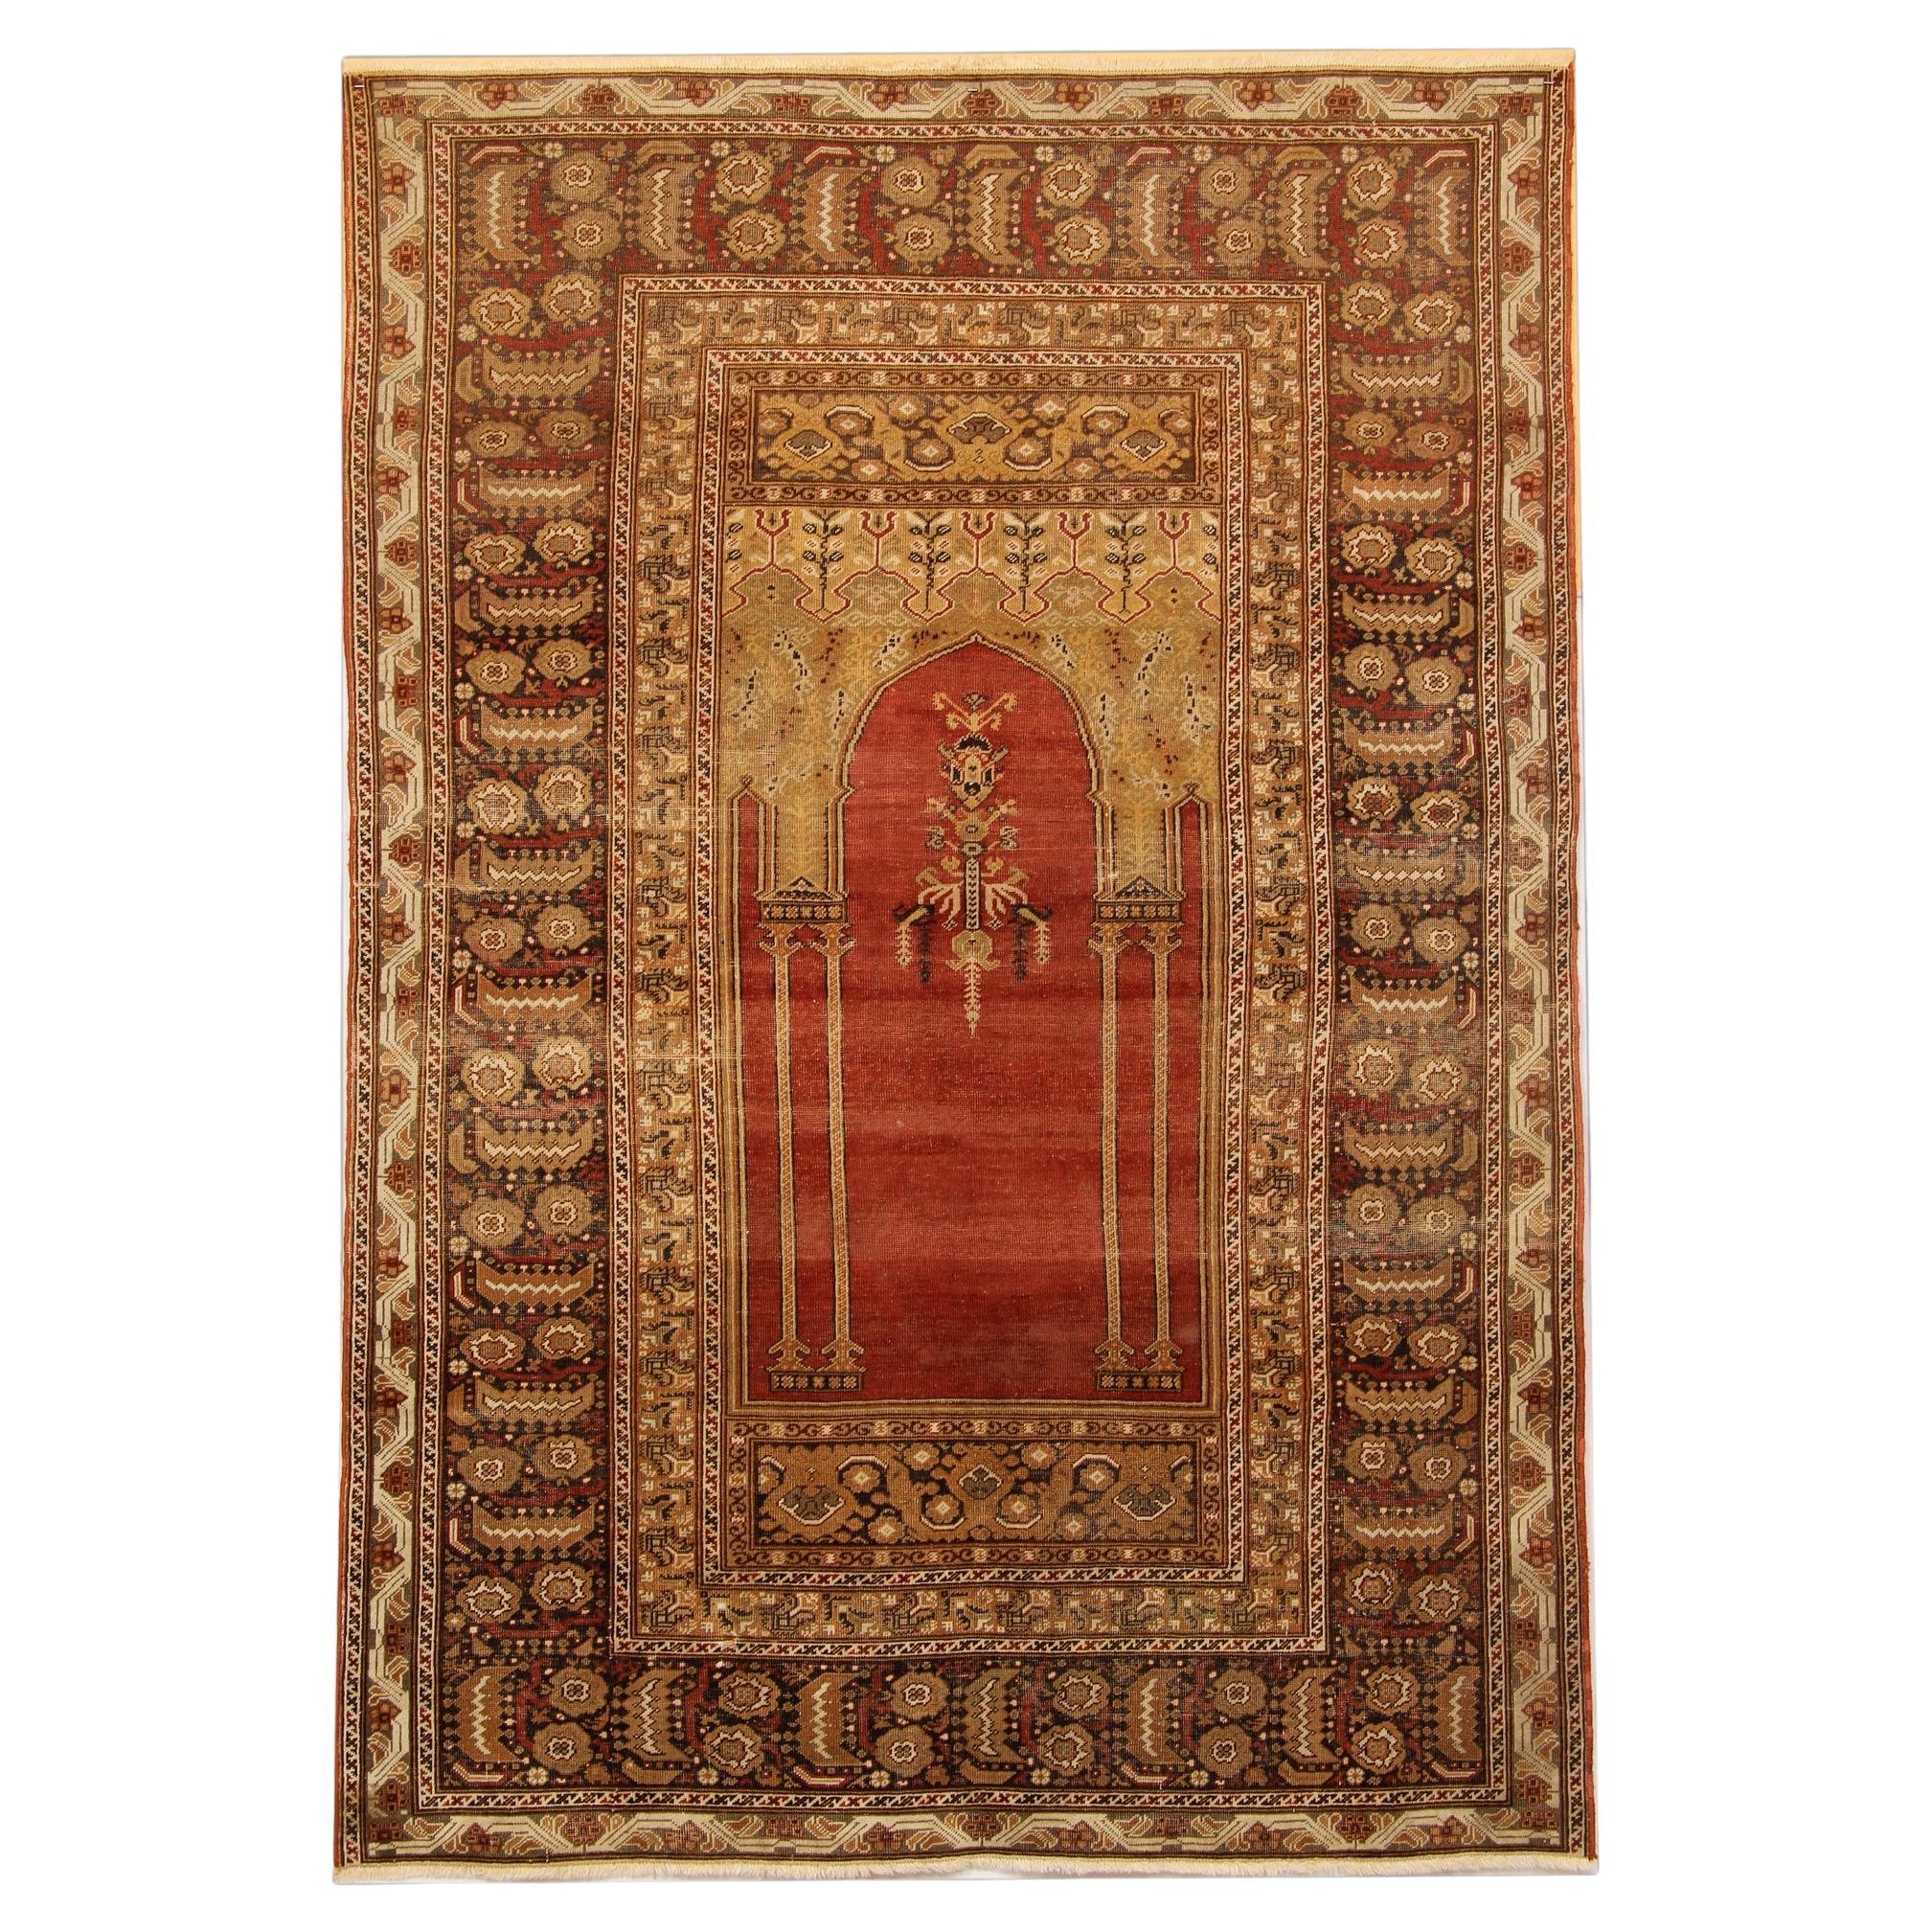 Tapis anciens rouges, tapis traditionnel turc, tapis de salon Mihrabi